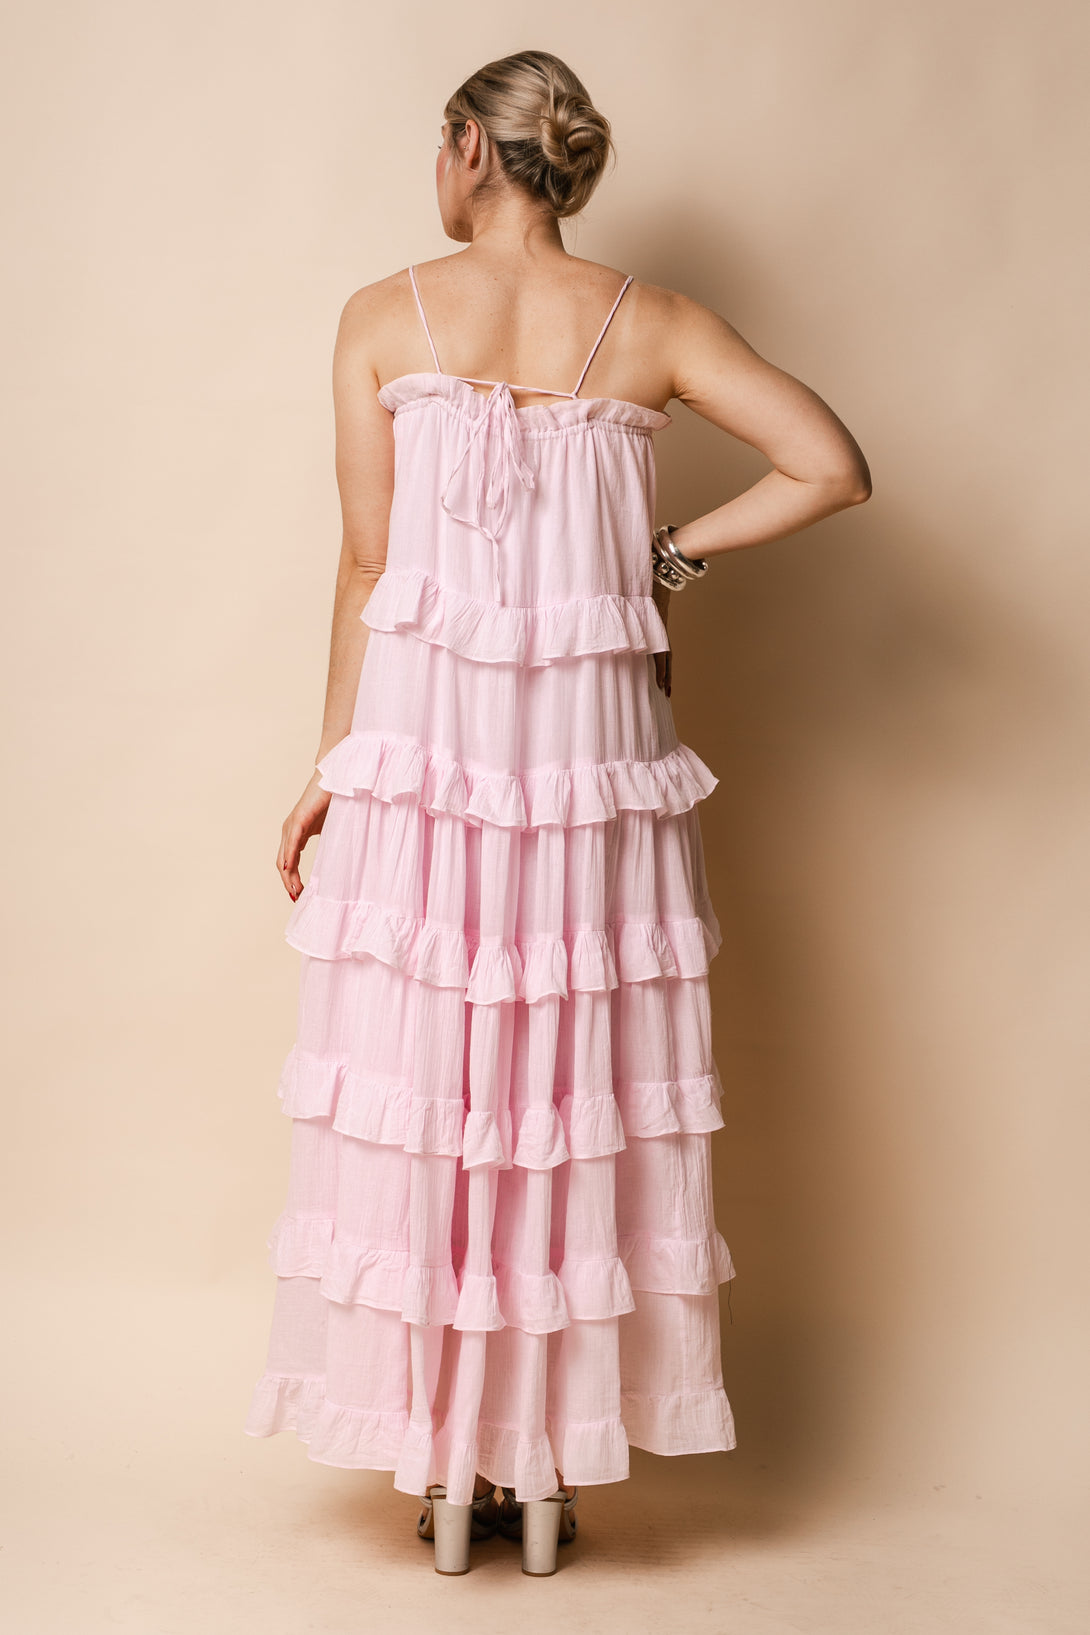 Callie Cotton Dress in Blush - Imagine Fashion